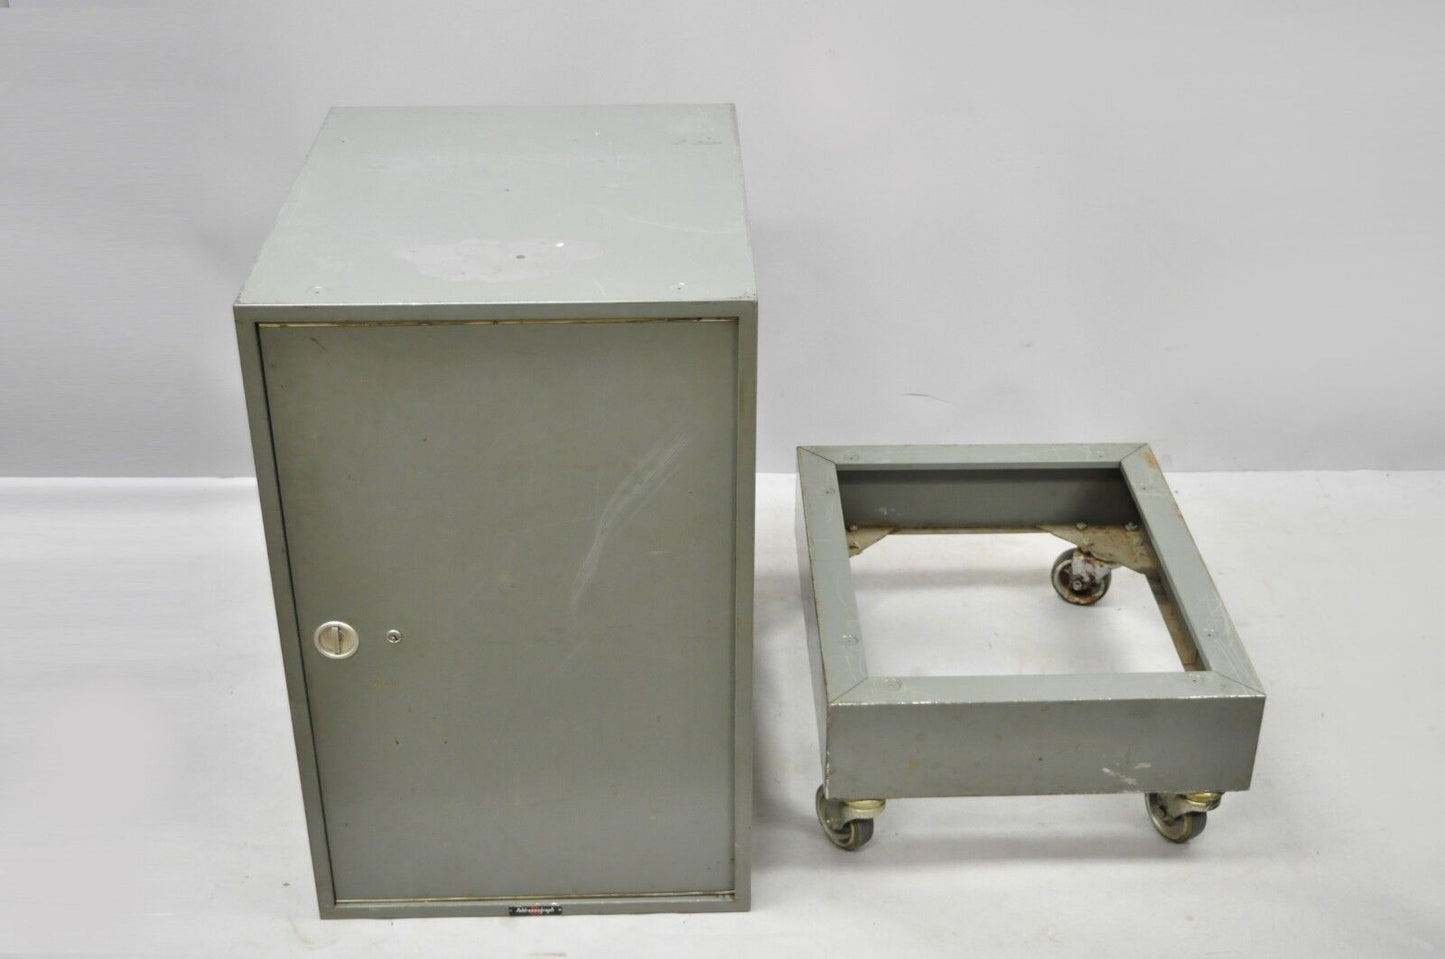 Vintage Industrial Steel Metal 30 Drawer Cataloge File Cabinet by Addressograph